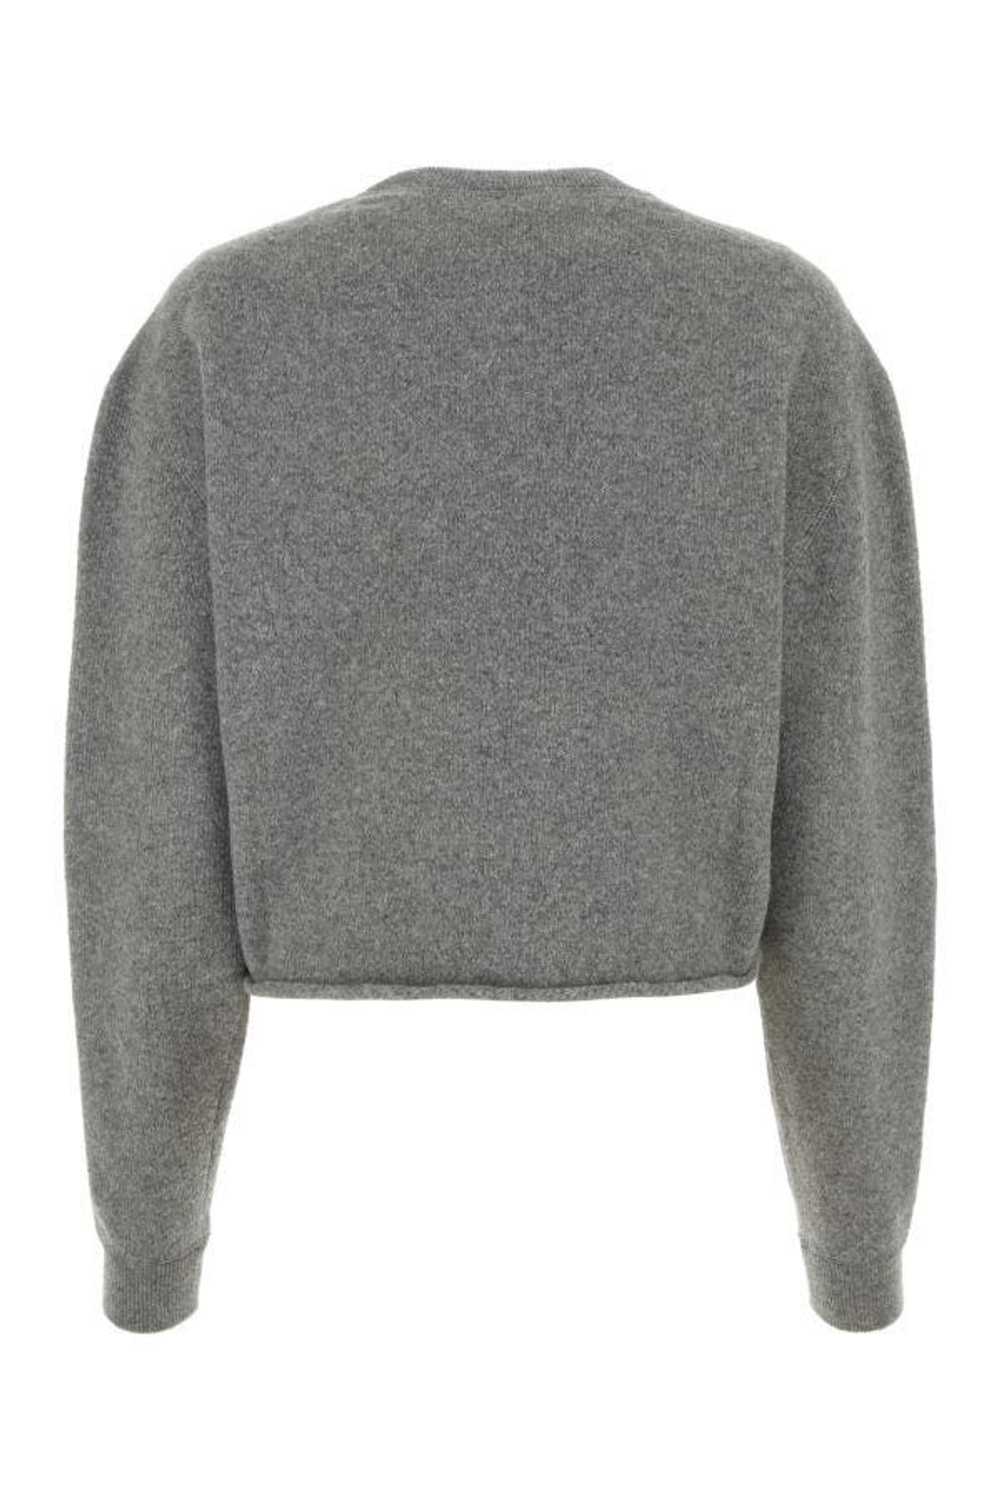 Miu Miu Grey Wool Blend Sweater - image 4